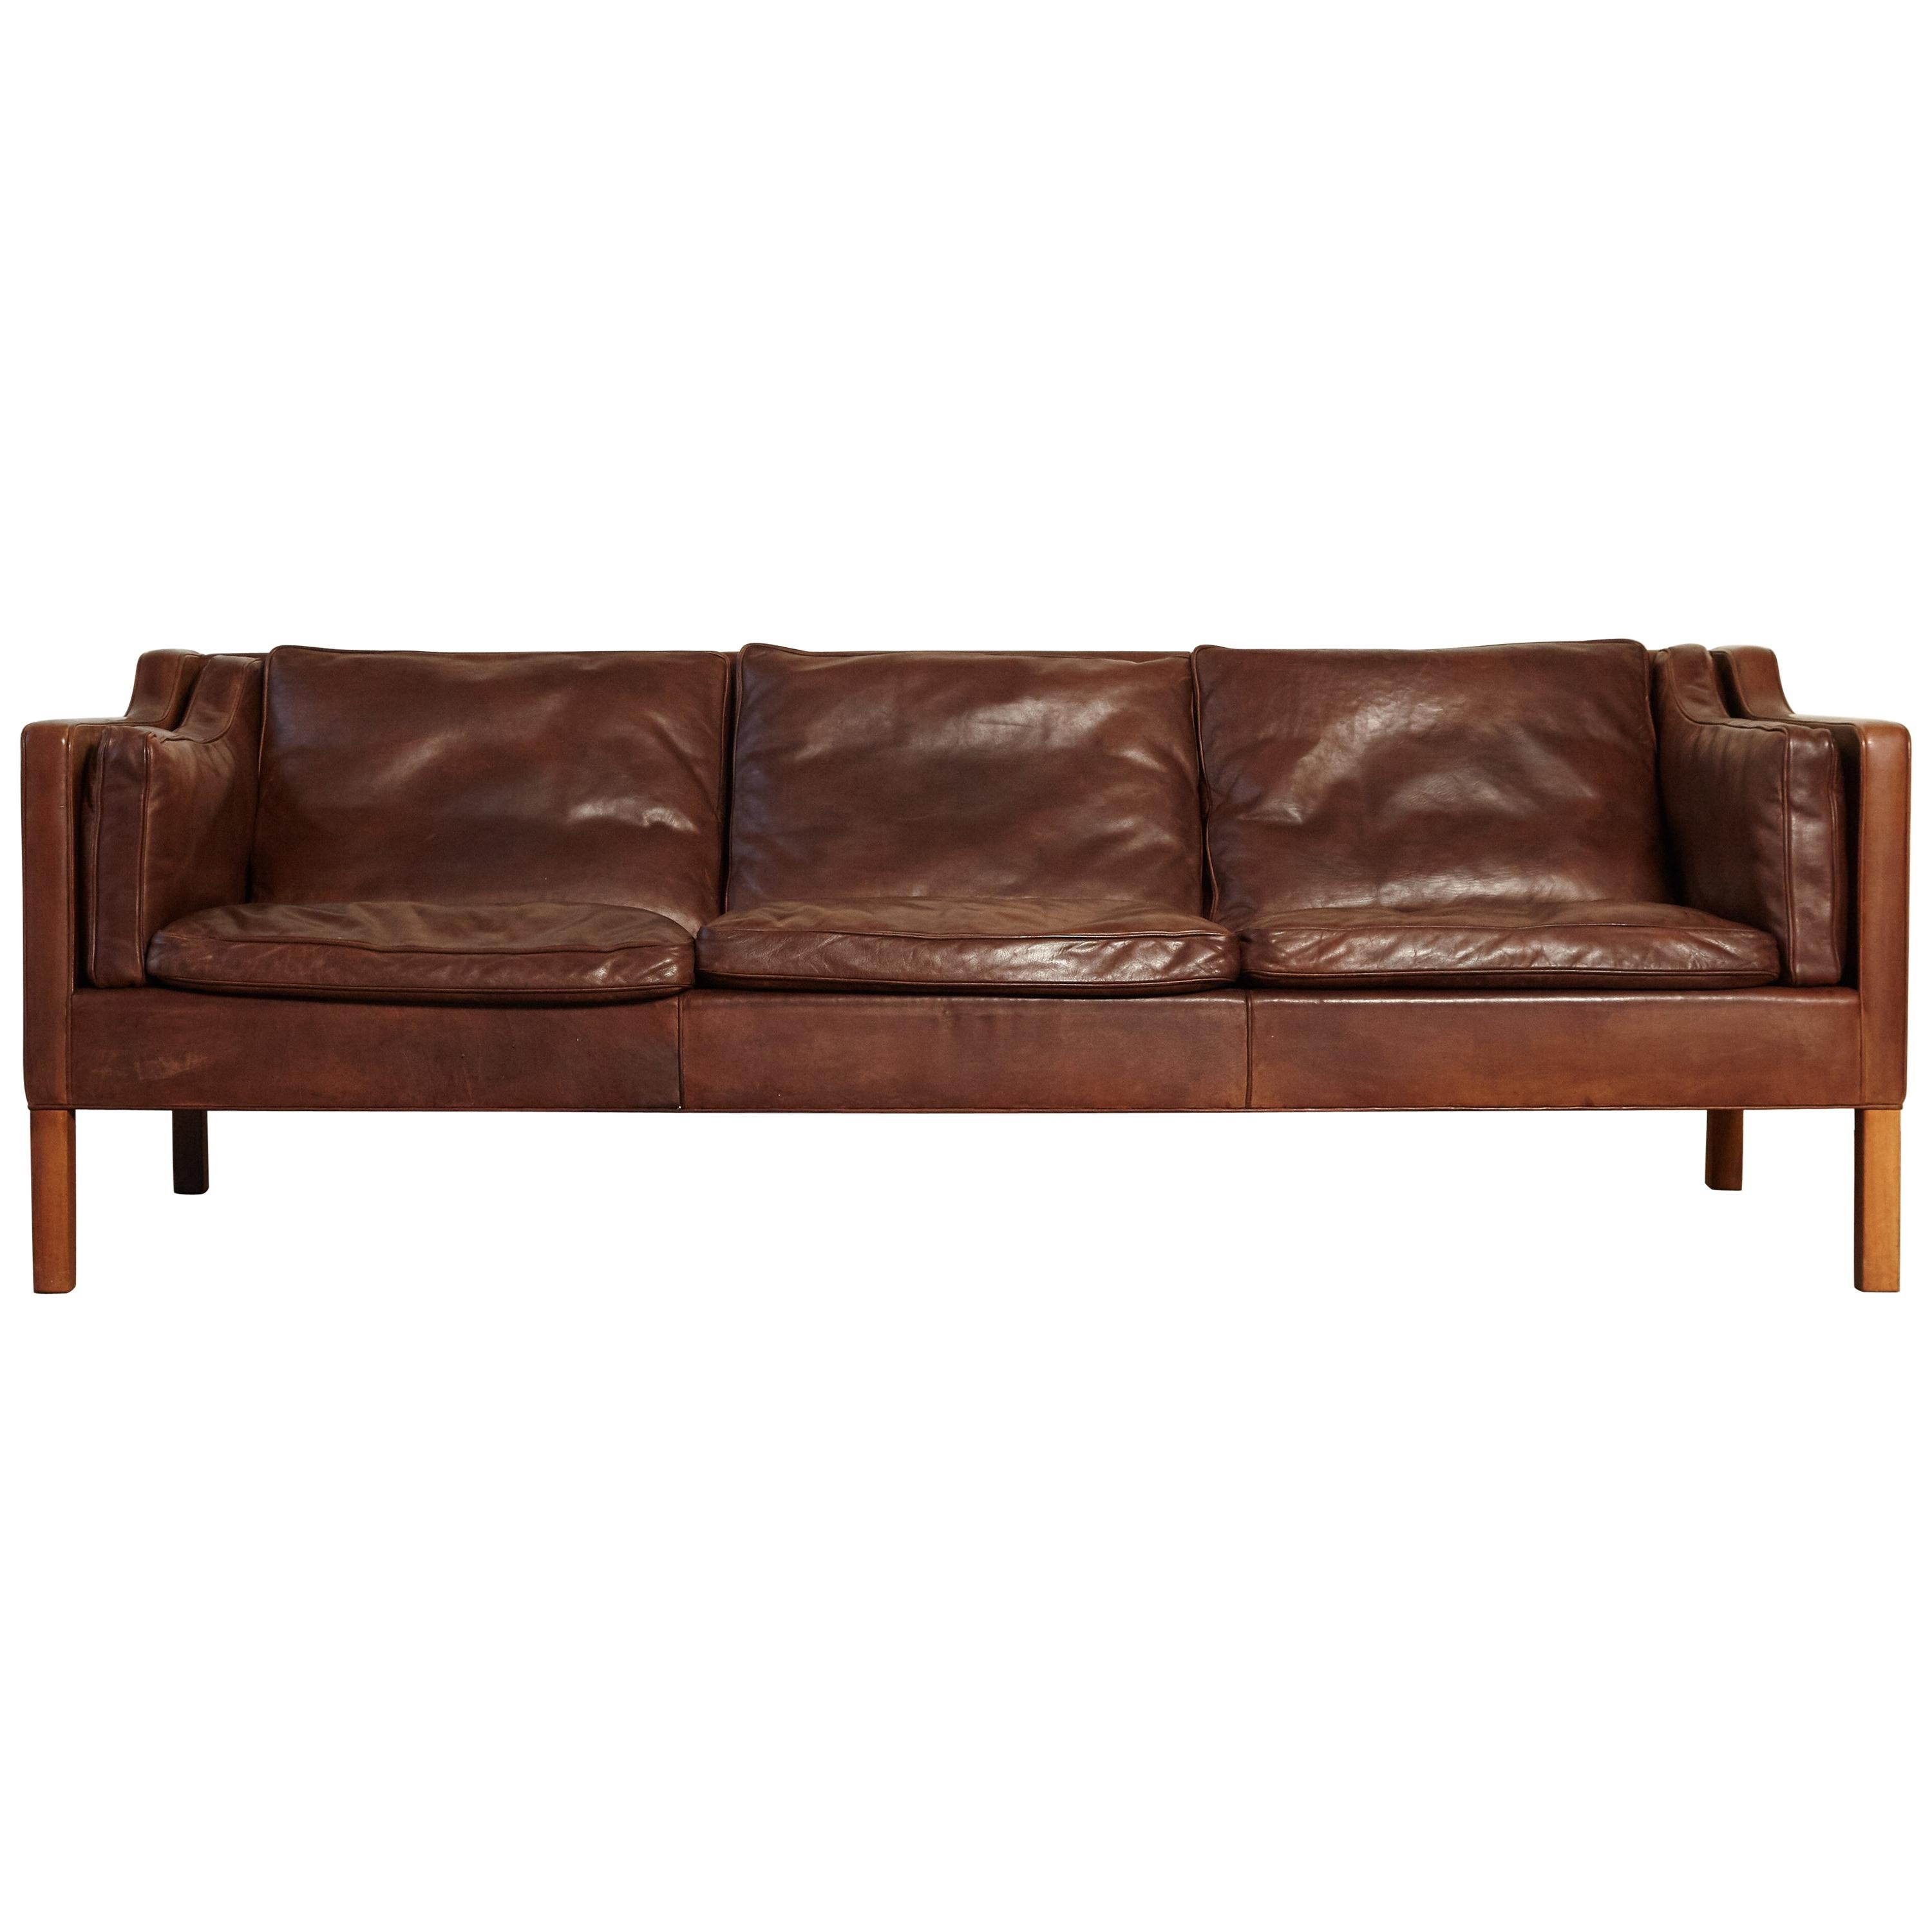 Original Borge Mogensen 2213 Sofa in Patinated Leather, Denmark, 1960s-1970s